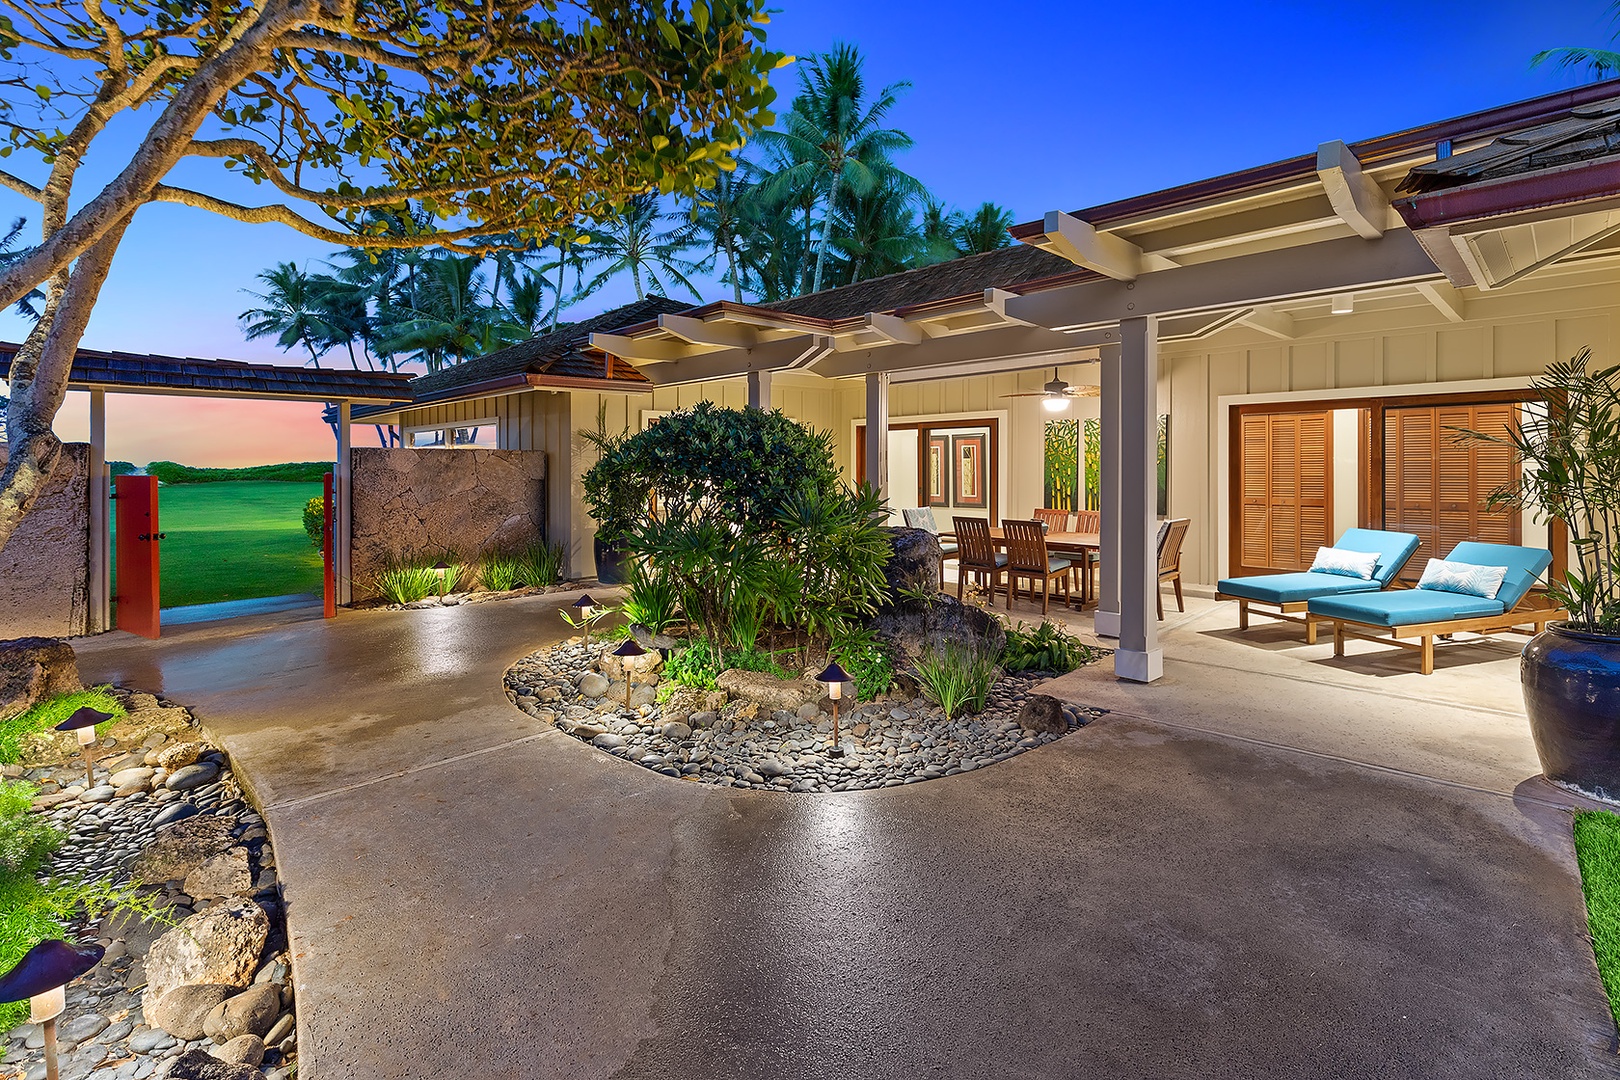 Kailua Vacation Rentals, Kailua Shores Estate 8 Bedroom - Beach House - Outdoor Lanai and Outdoor Dining